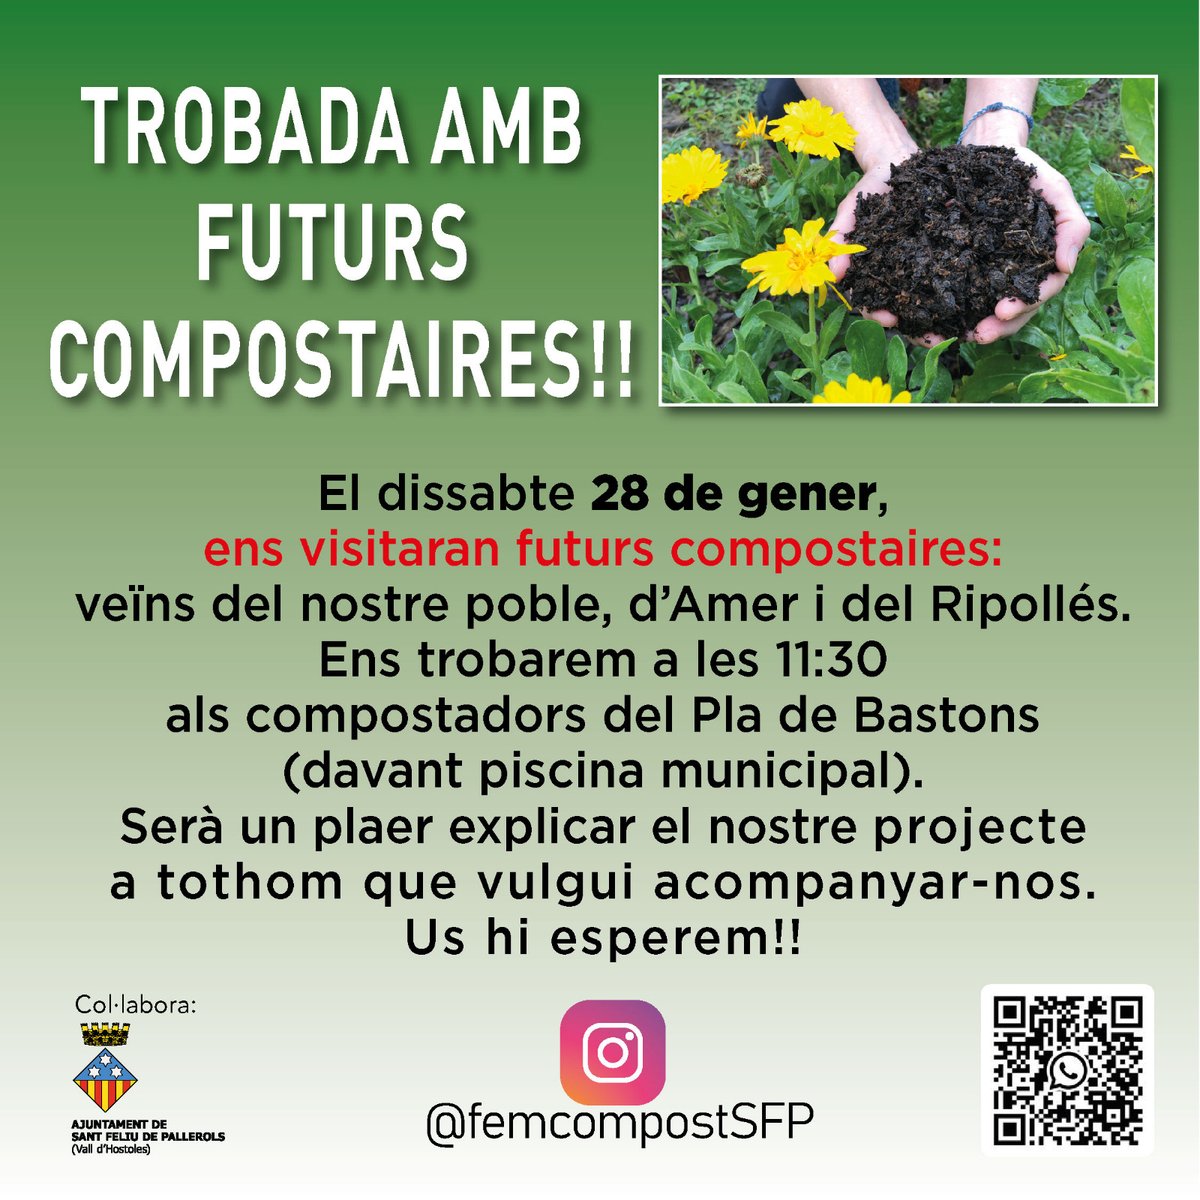 TROBADA AMB FUTURS COMPOSTAIRES! 🌿

🗓️Dissabte 28 de gener
🕧 11:30 h
📍Compostadors del Pla de Bastons
(davant piscina municipal)

Us hi esperem!

@femcompostsfp 
#santfeliudepallerols #compostatge #ecològic #residuszero #zerowaste #compost #garrotxa